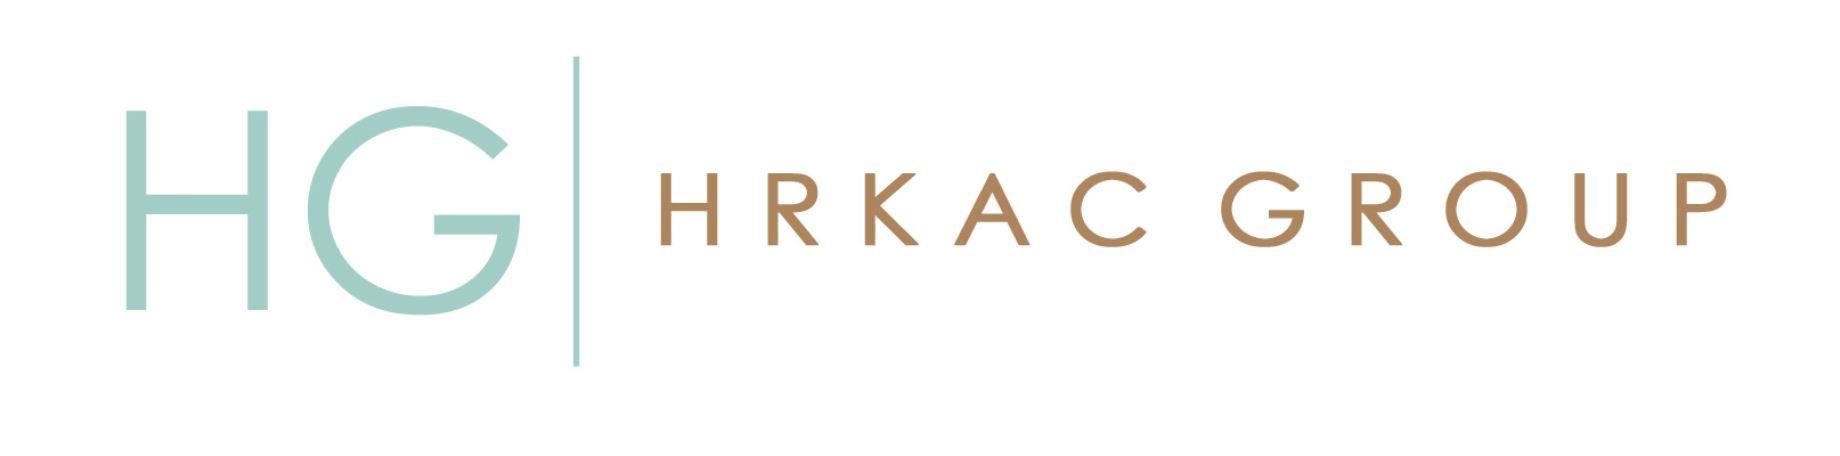 Hrkac Group